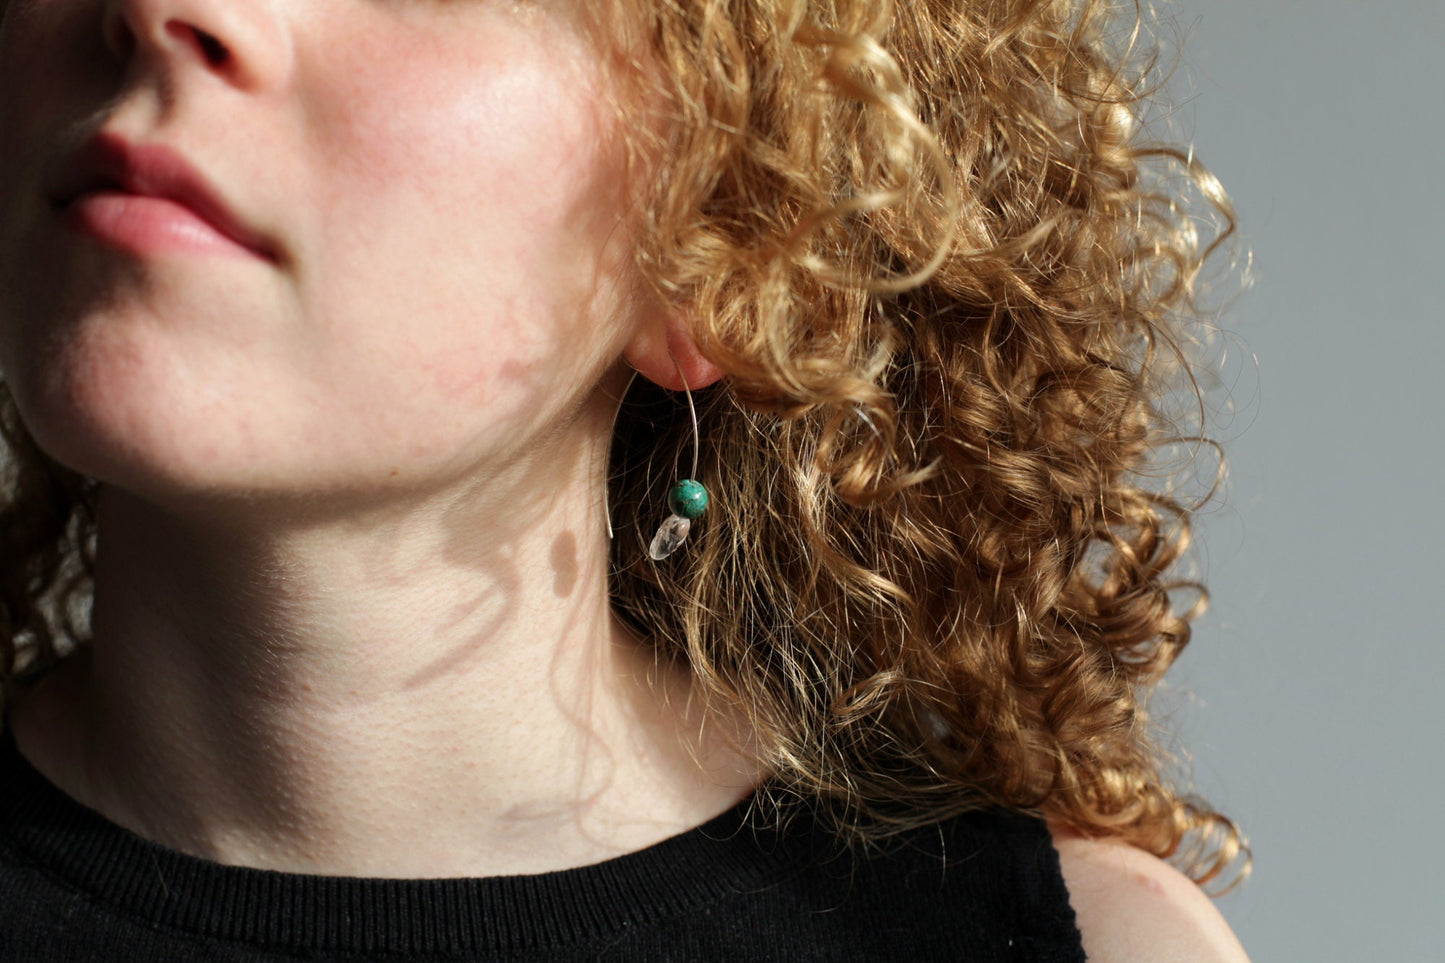 Turquoise leaf silver open hoop earrings